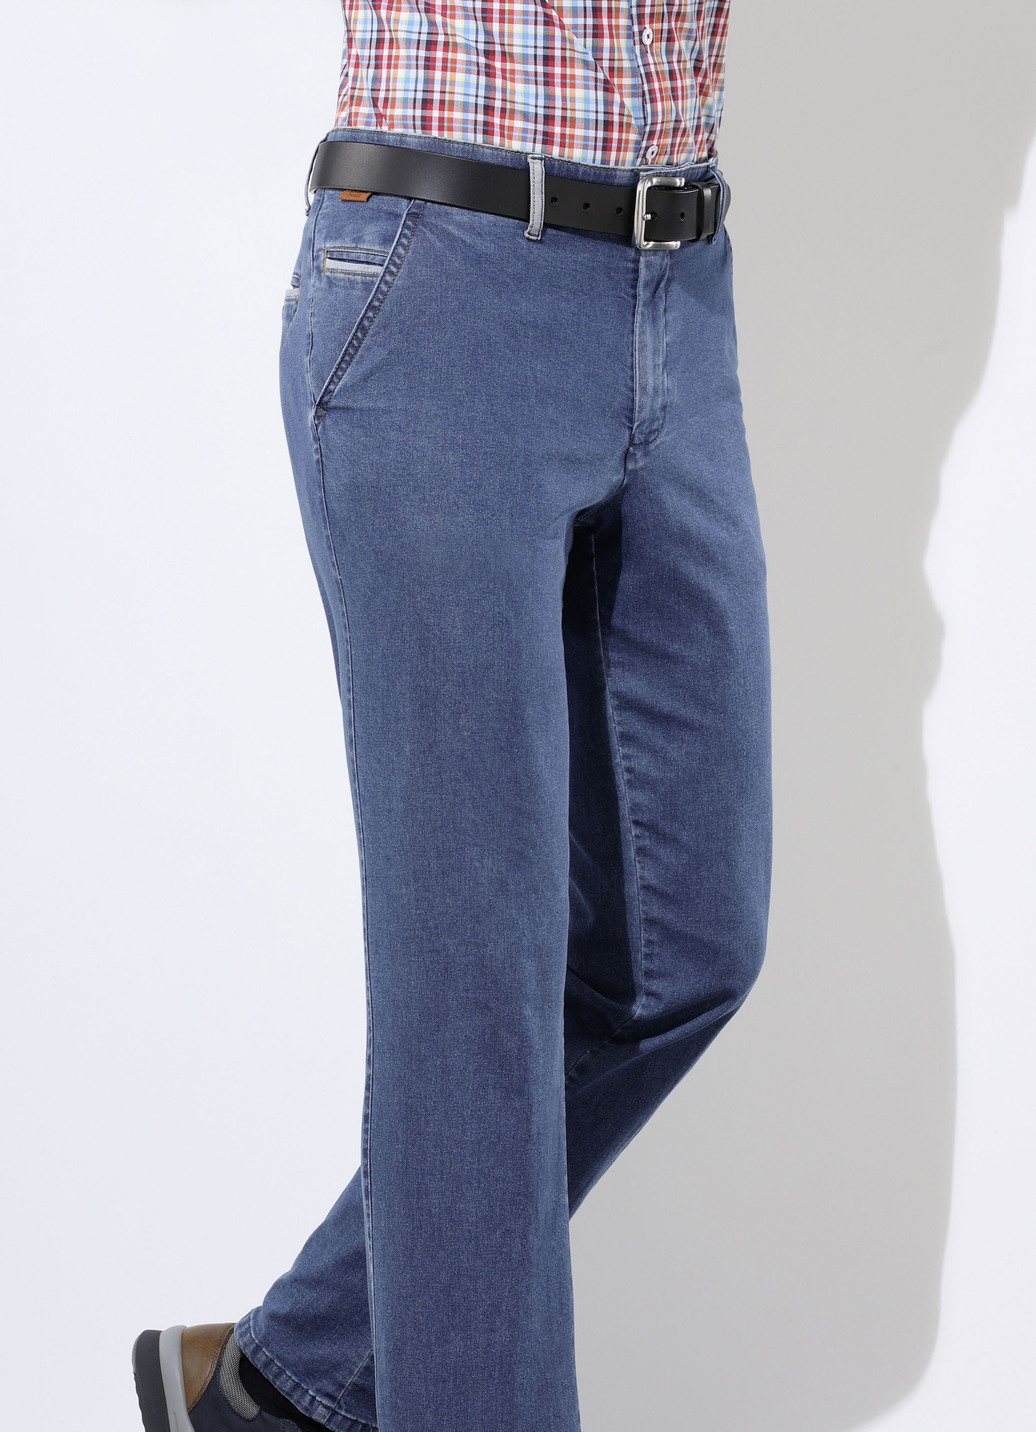 "Francesco Botti"-Jeans in 3 Farben, Jeansblau, Größe 58 von FRANCESCO BOTTI